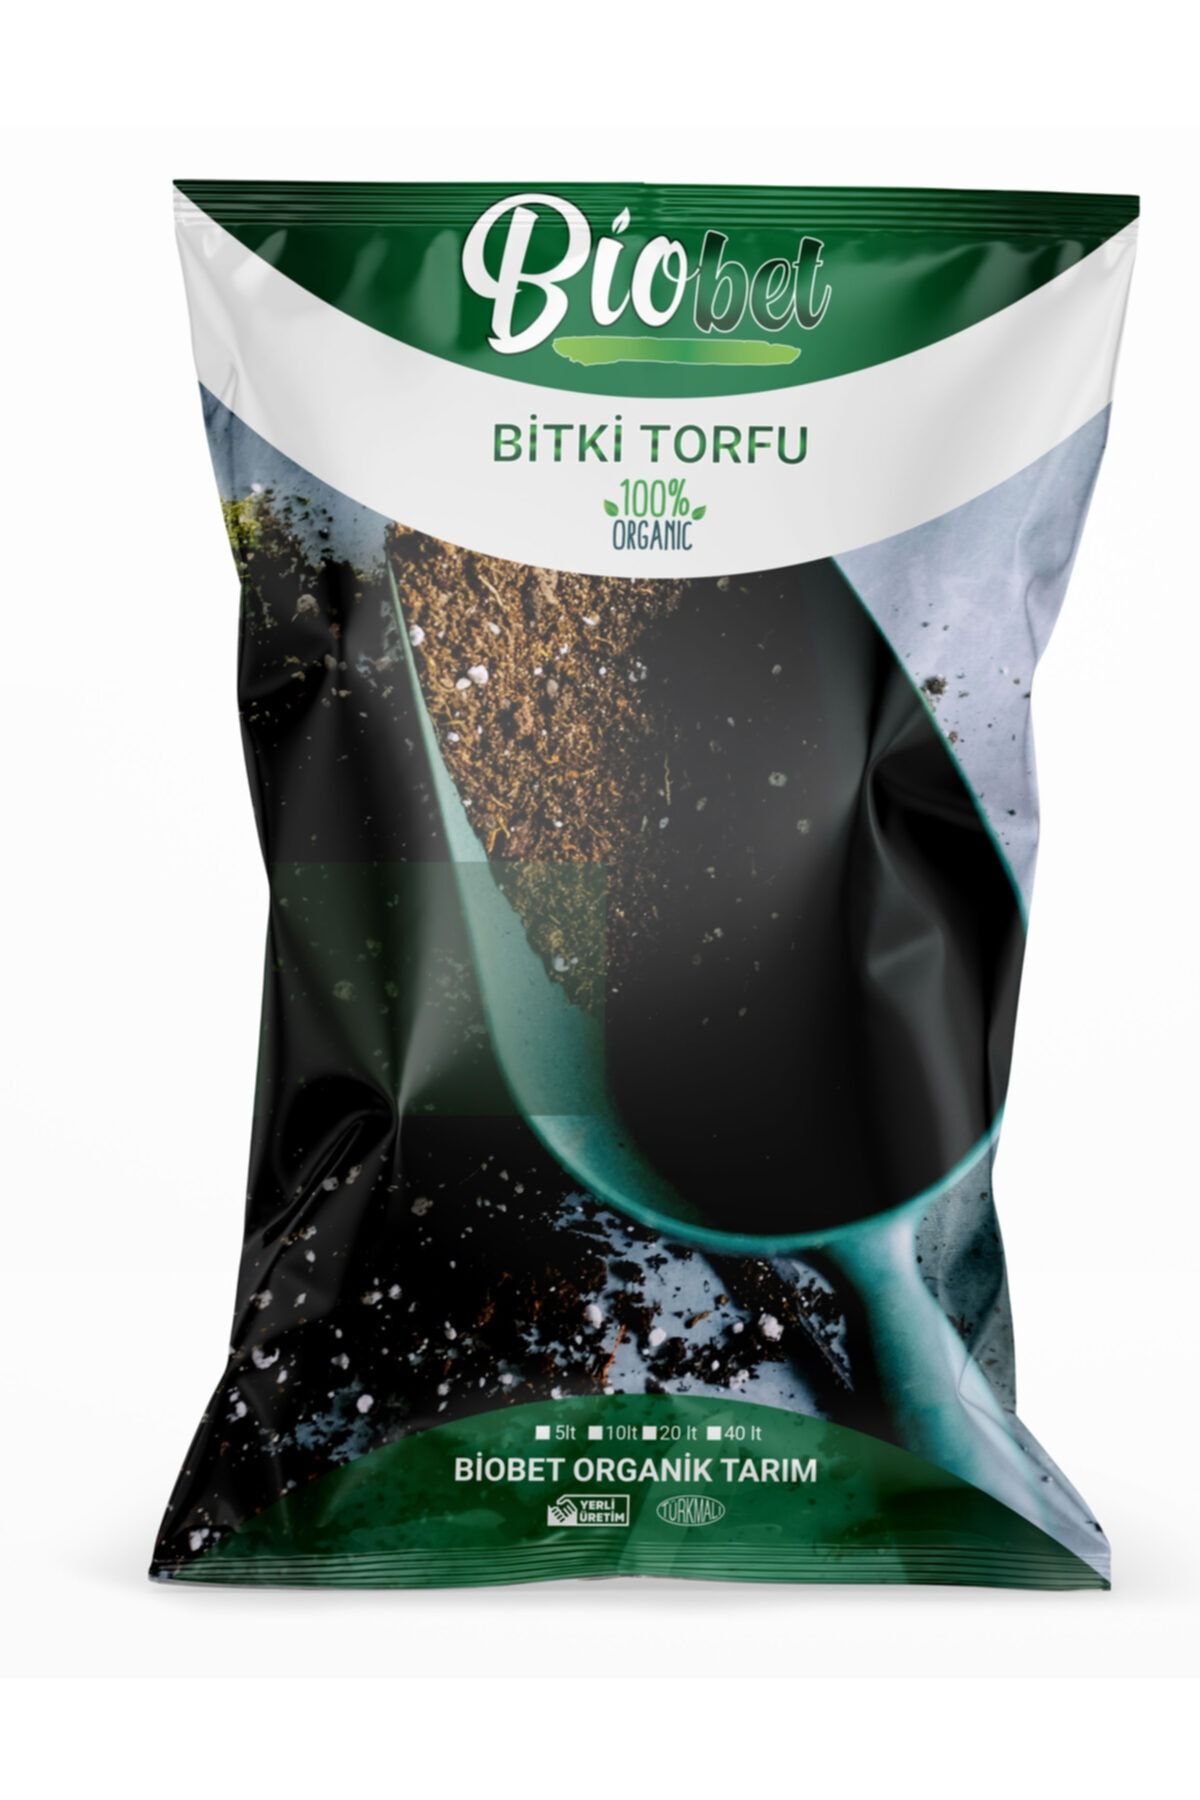 Biobet Bitki Torfu 40 Litre